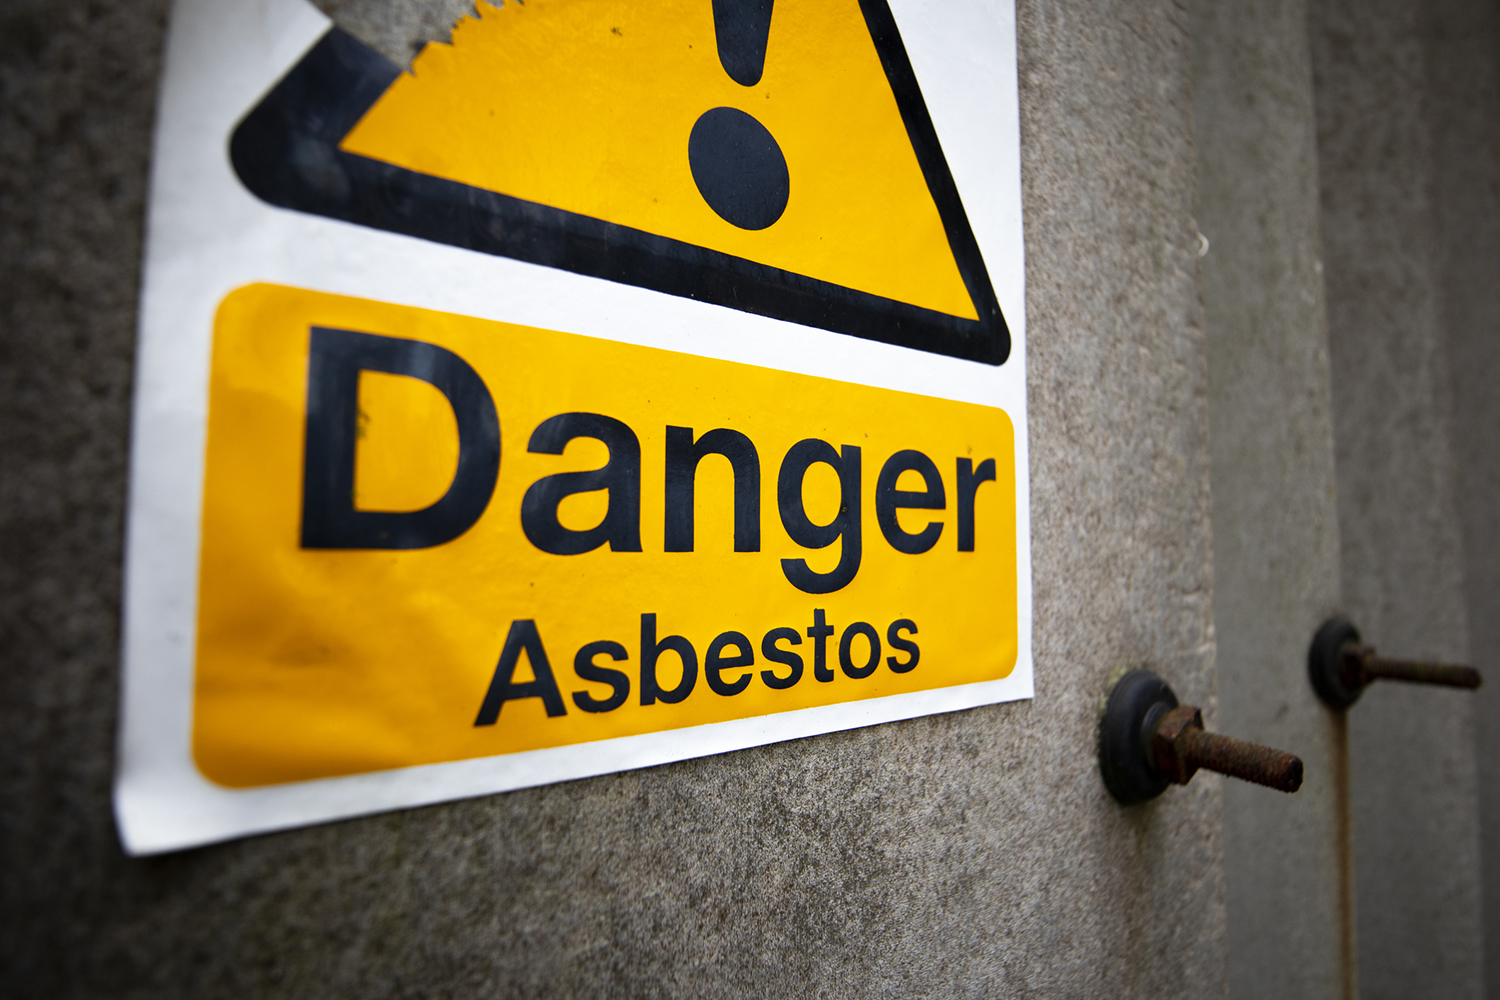 Extensive asbestos remediation